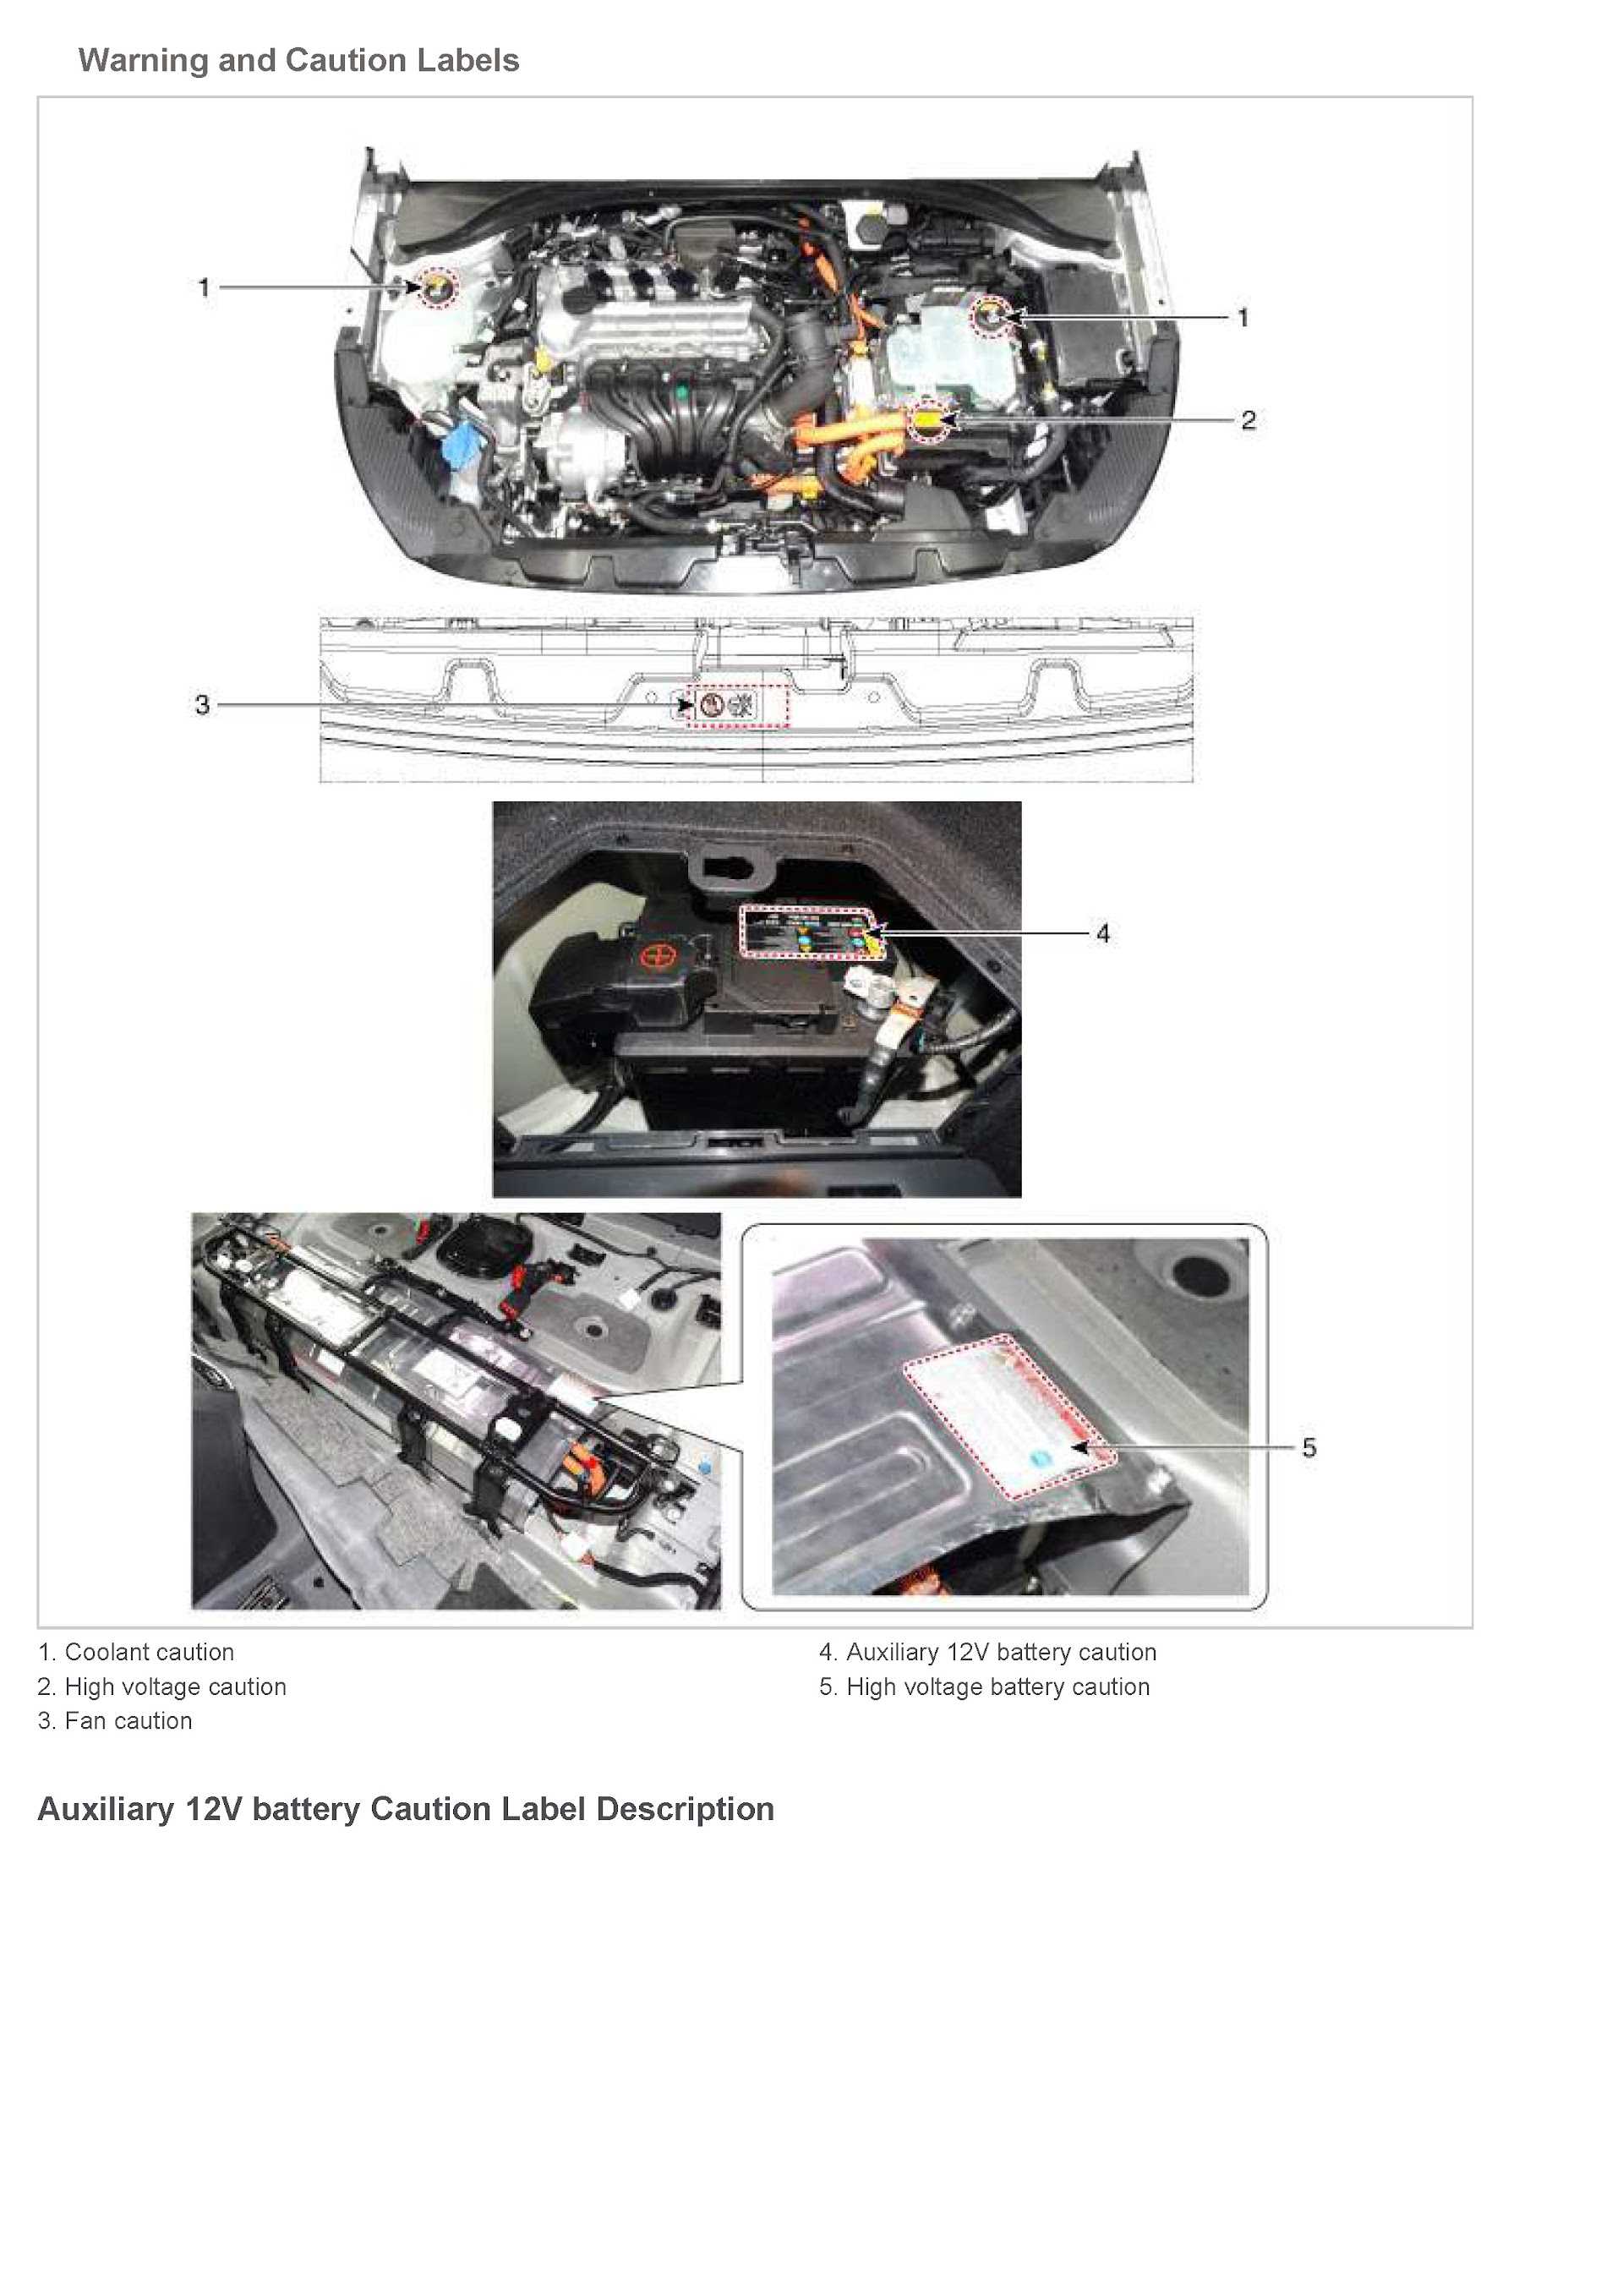 2017 Hyundai Ioniq Repair Manual, Warning and Caution Labels